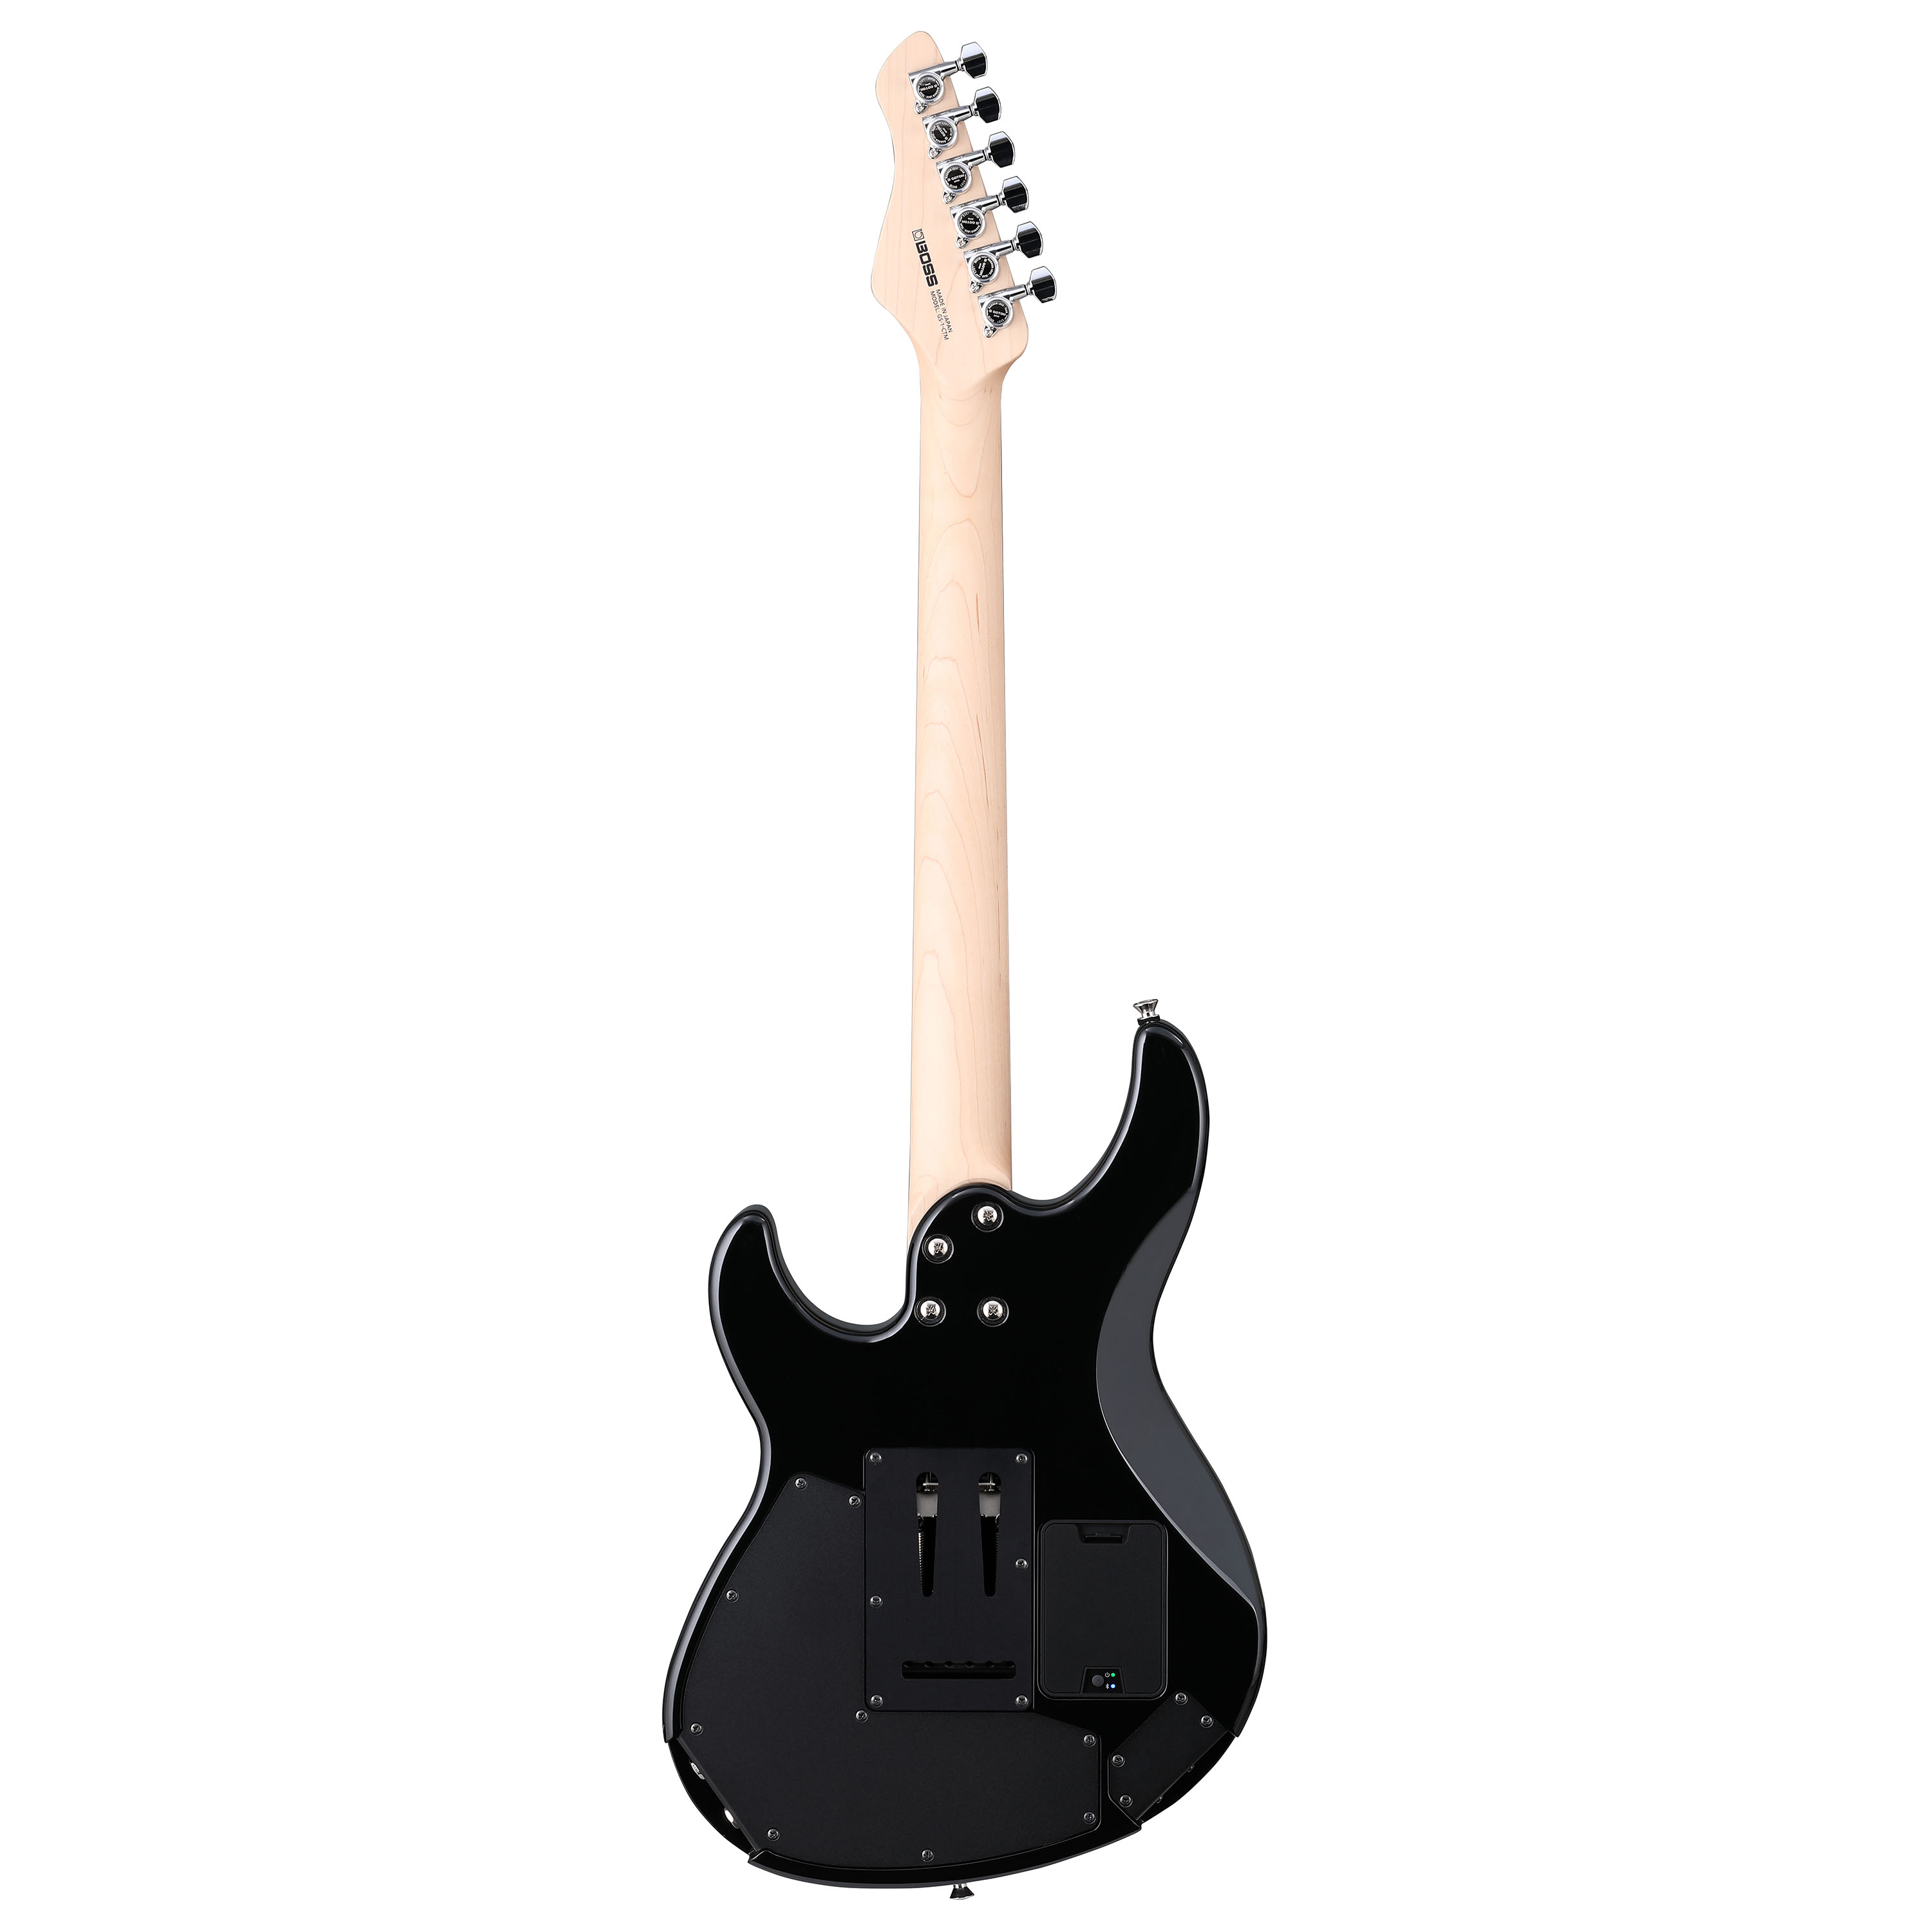 Boss Eurus Gs-1 Hh Trem Rw - Black - Modeling guitar - Variation 2